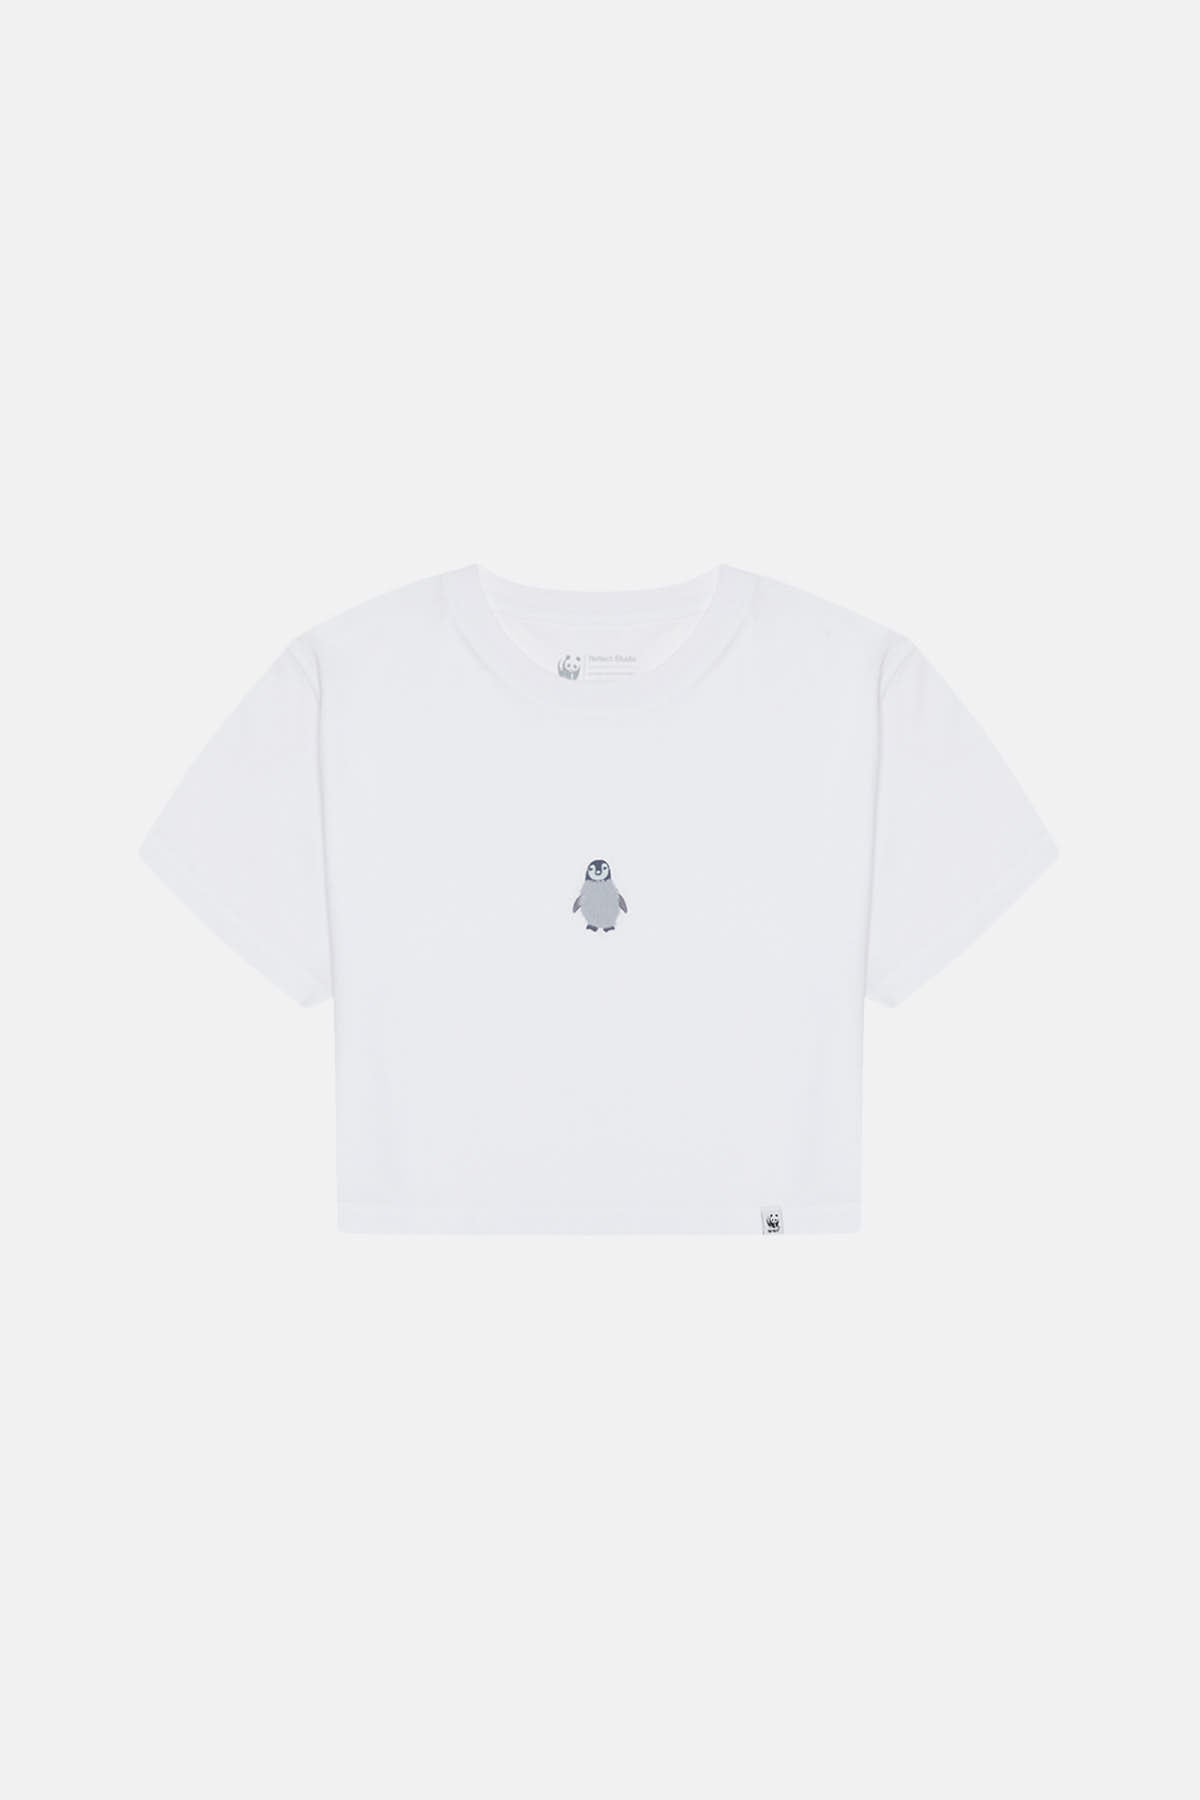 Yavru İmparator Penguen Supreme Crop T-shirt  - Beyaz